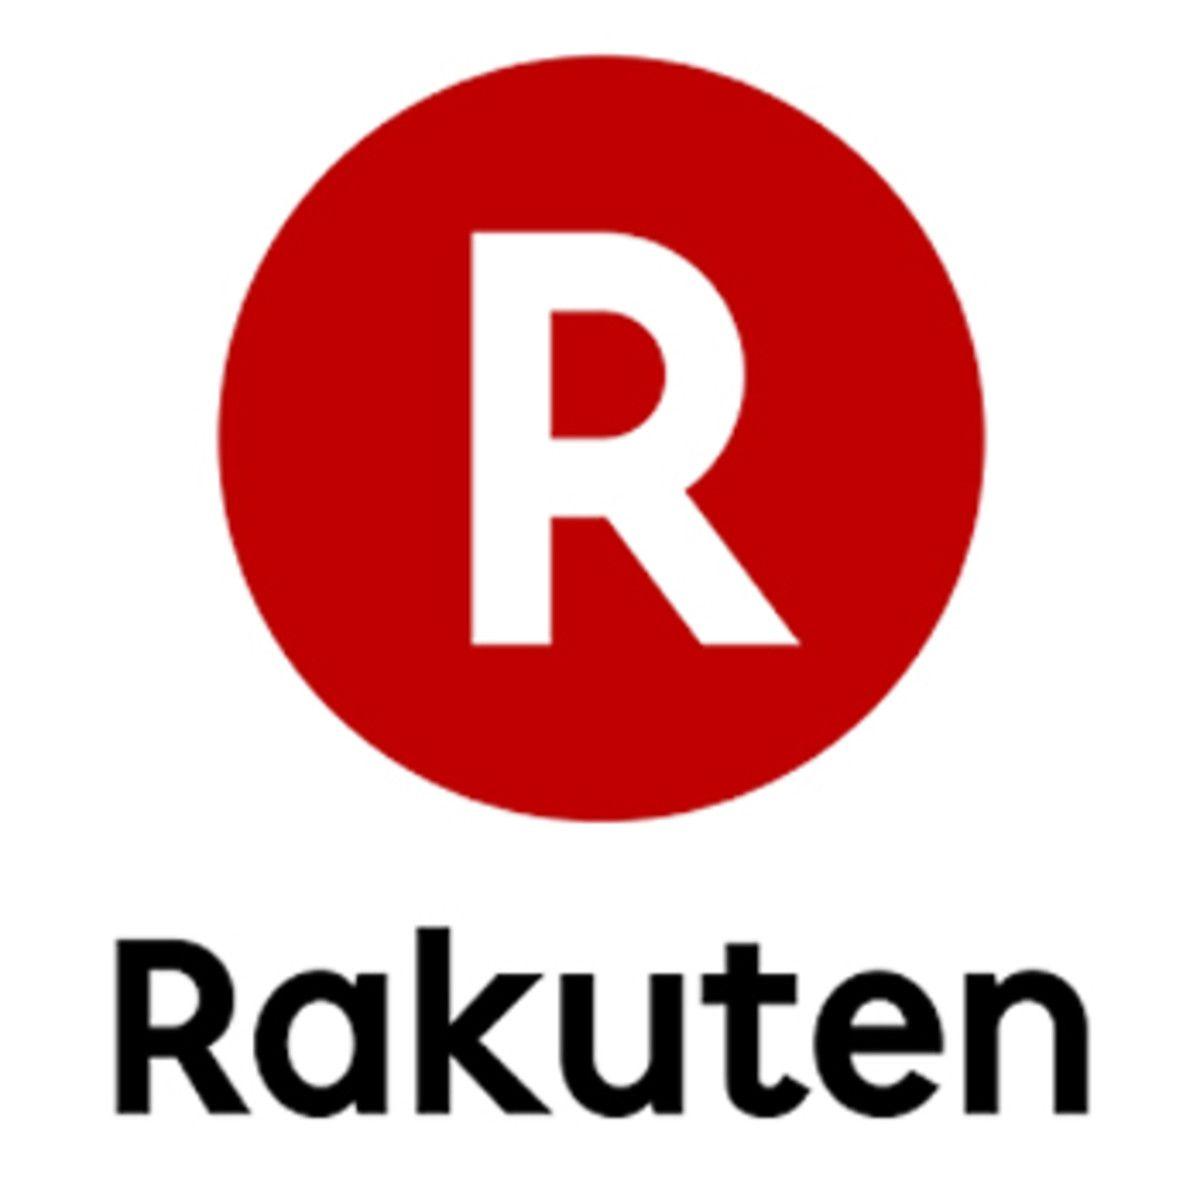 Rakuten Logo - eBay rival Rakuten to close its UK marketplace - PC Retail